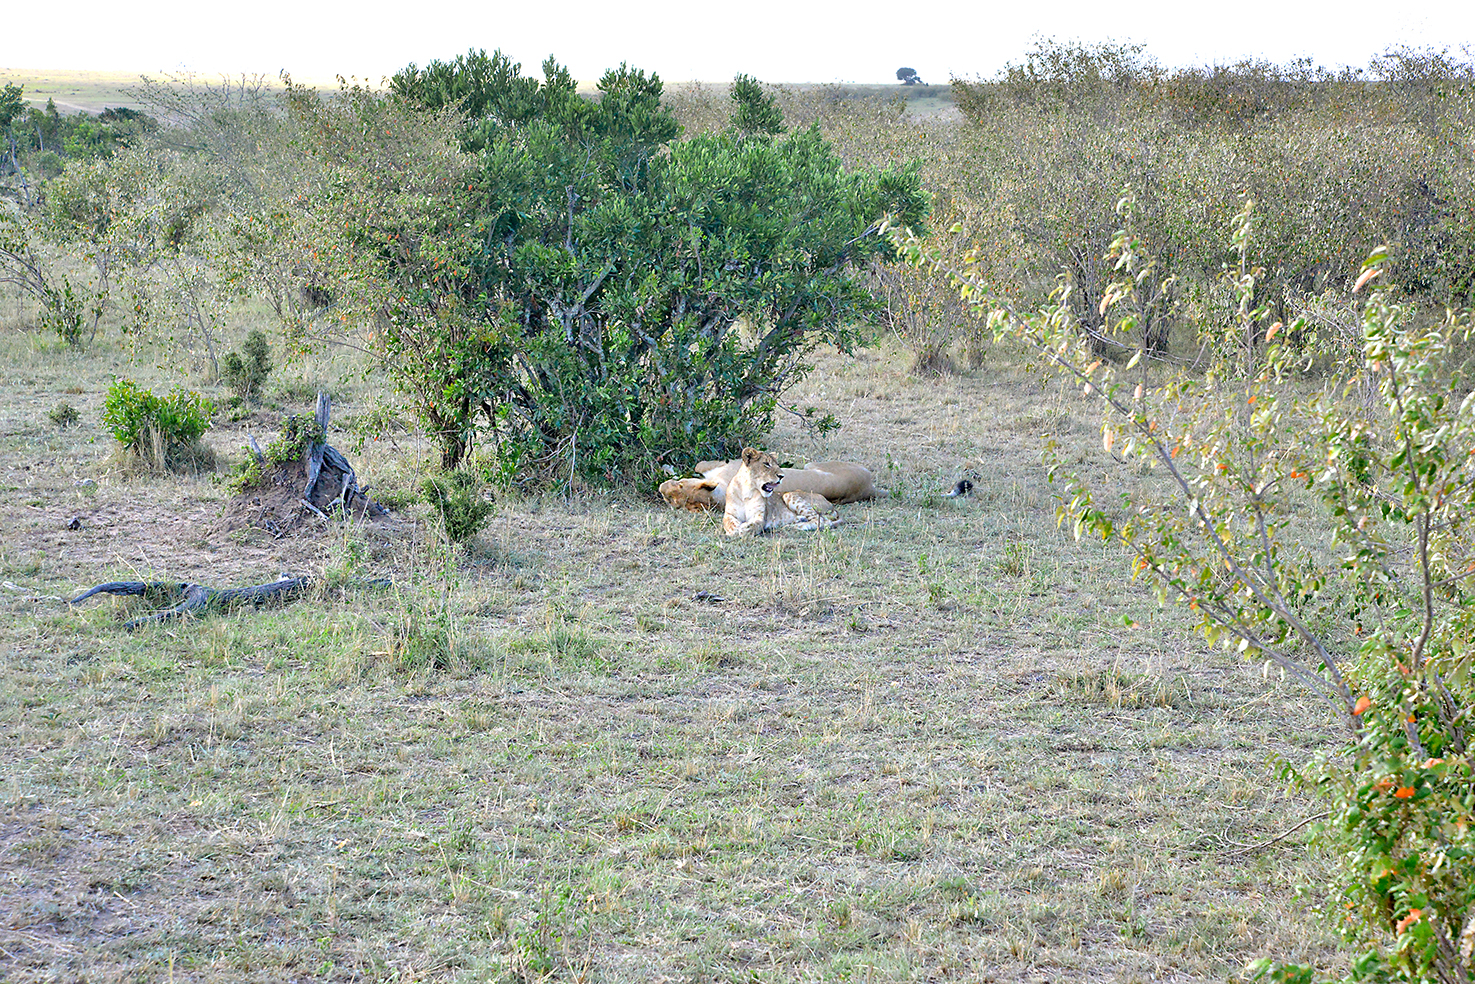 018 Masai Mara 1